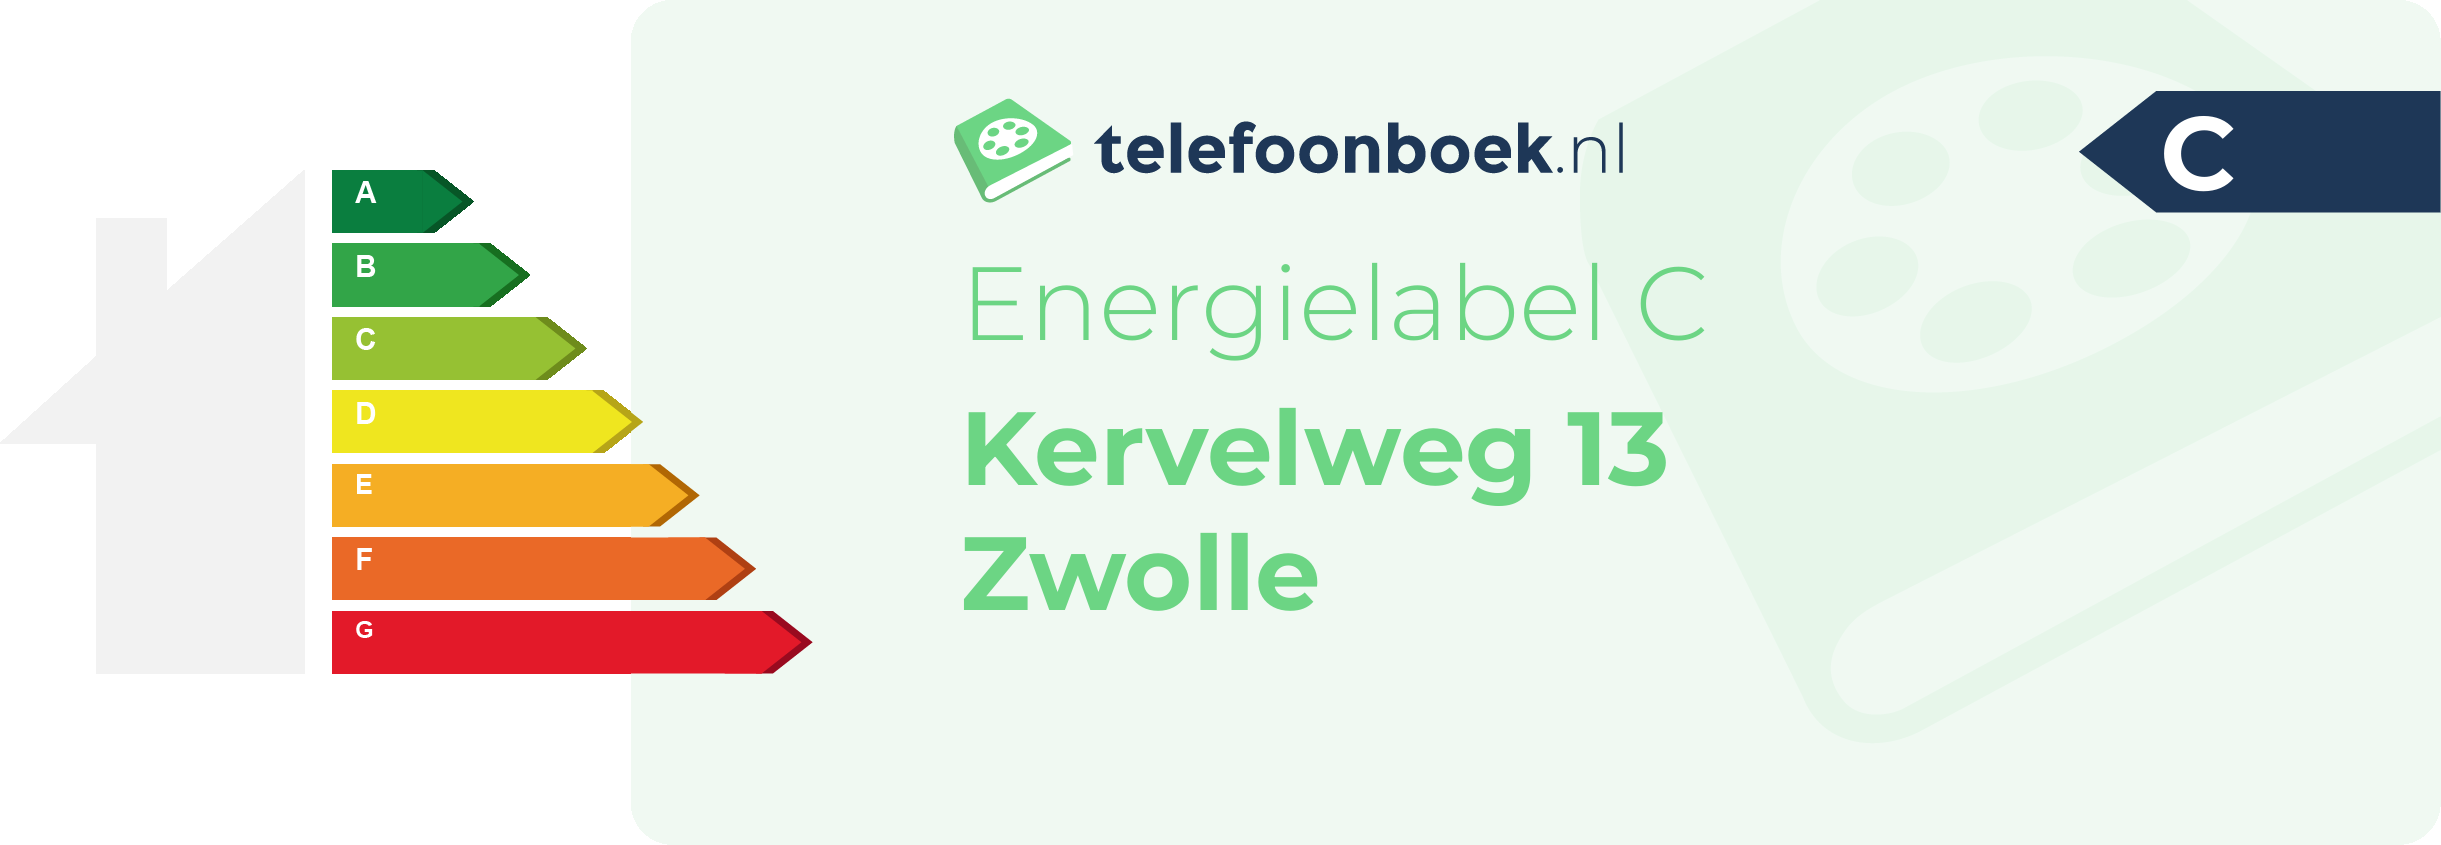 Energielabel Kervelweg 13 Zwolle